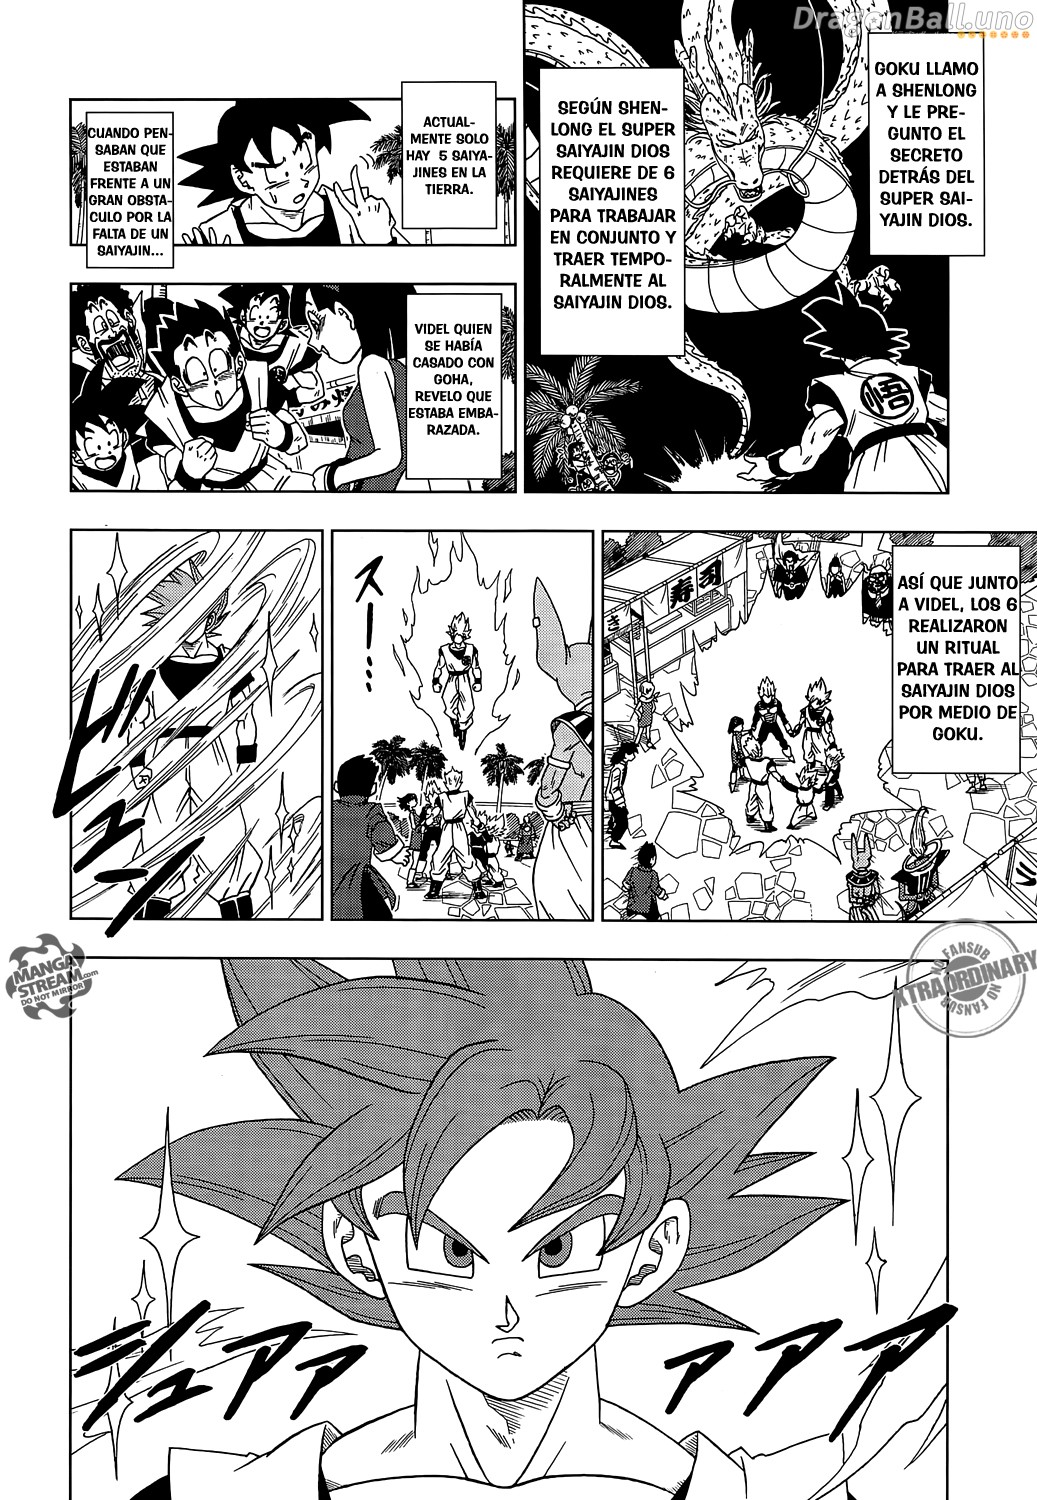 Dragon Ball Super: Cuarto manga ya traducido al español ...